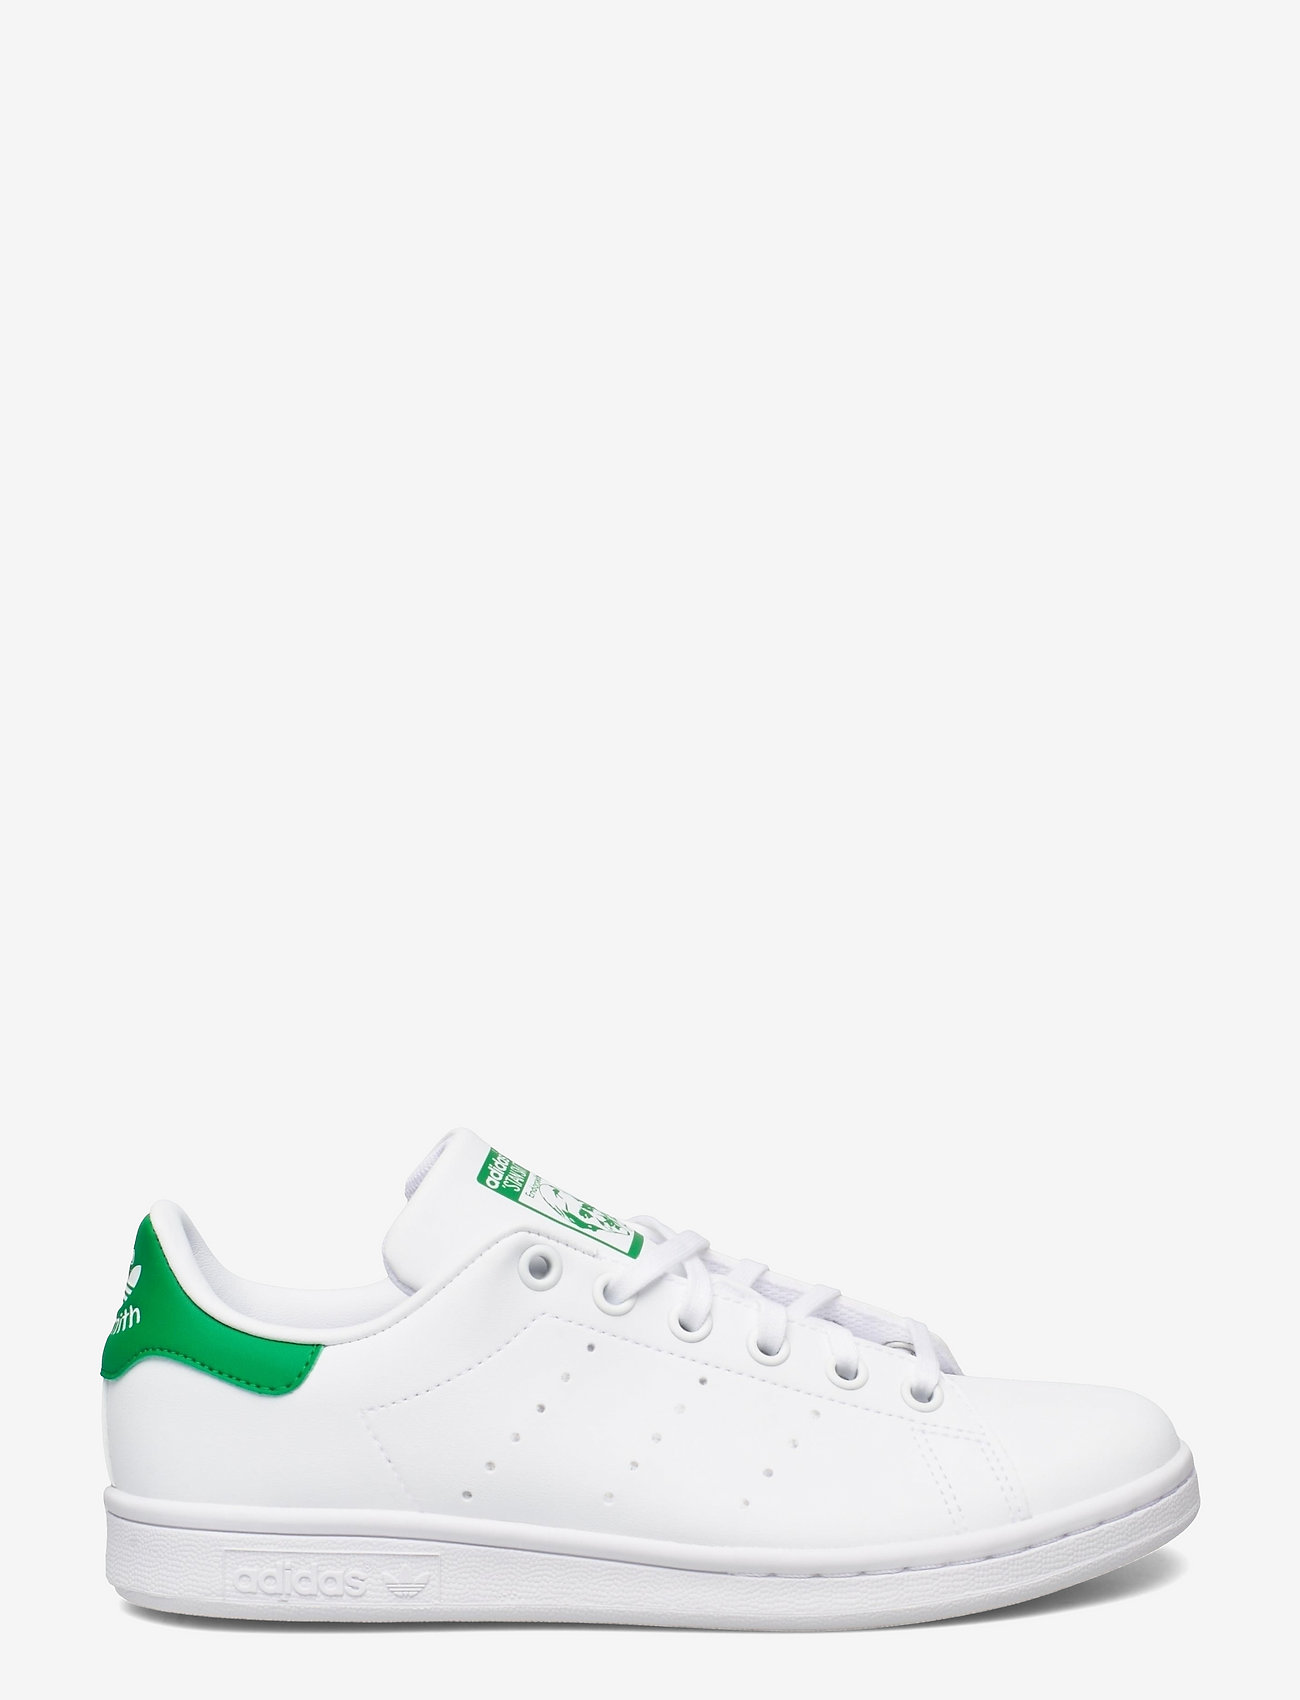 adidas Originals - STAN SMITH J - låga sneakers - ftwwht/ftwwht/green - 1